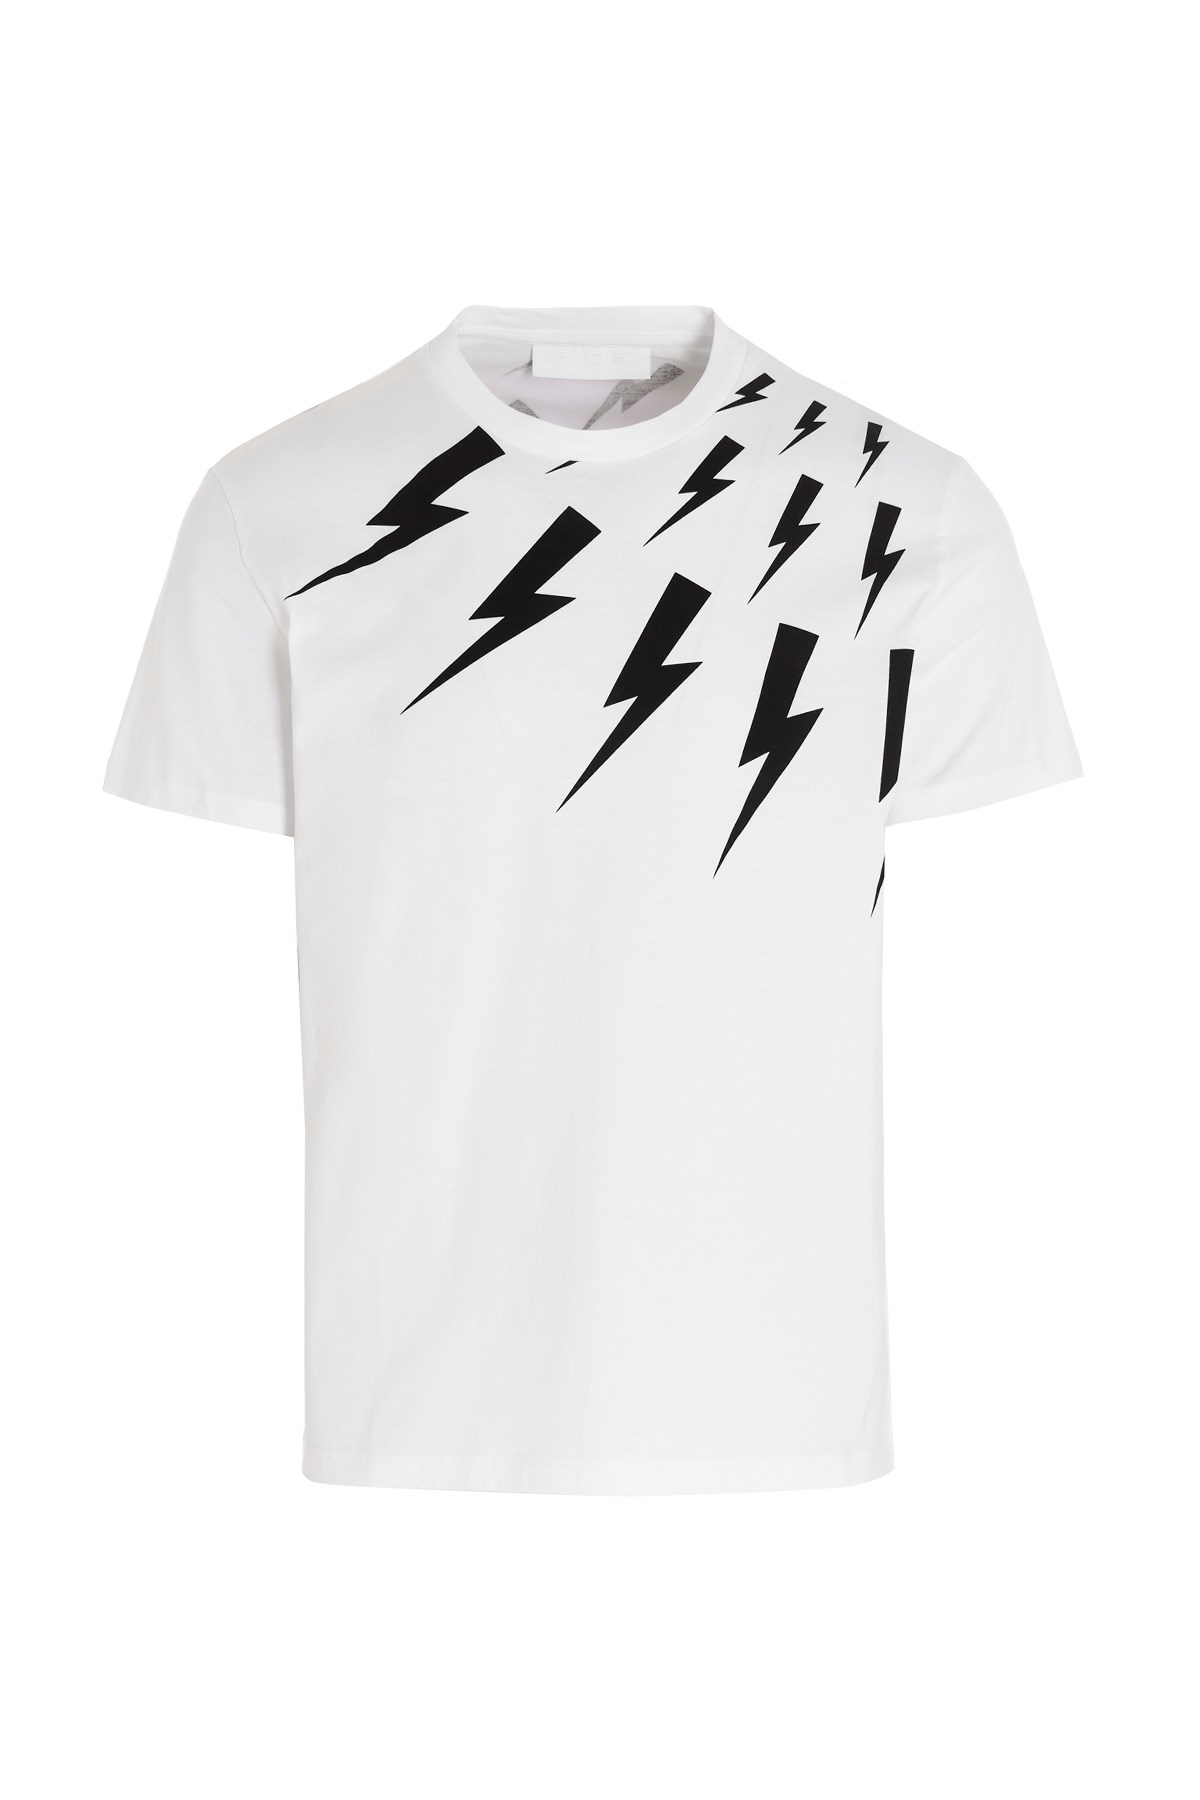 NEIL BARRETT 'Thunderbolt’ T-Shirt